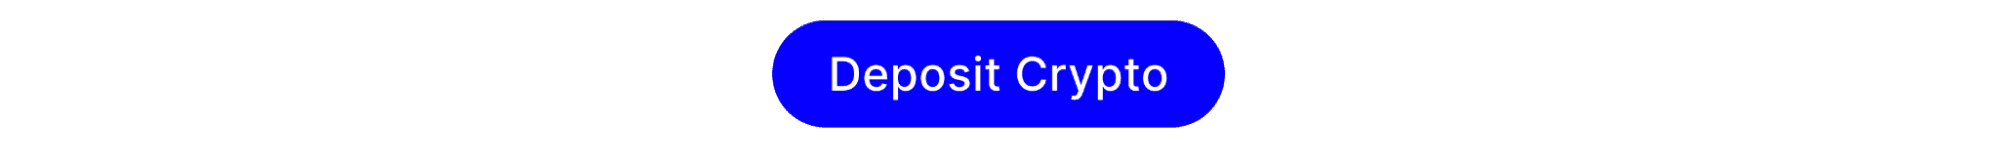 deposit-crypto.png